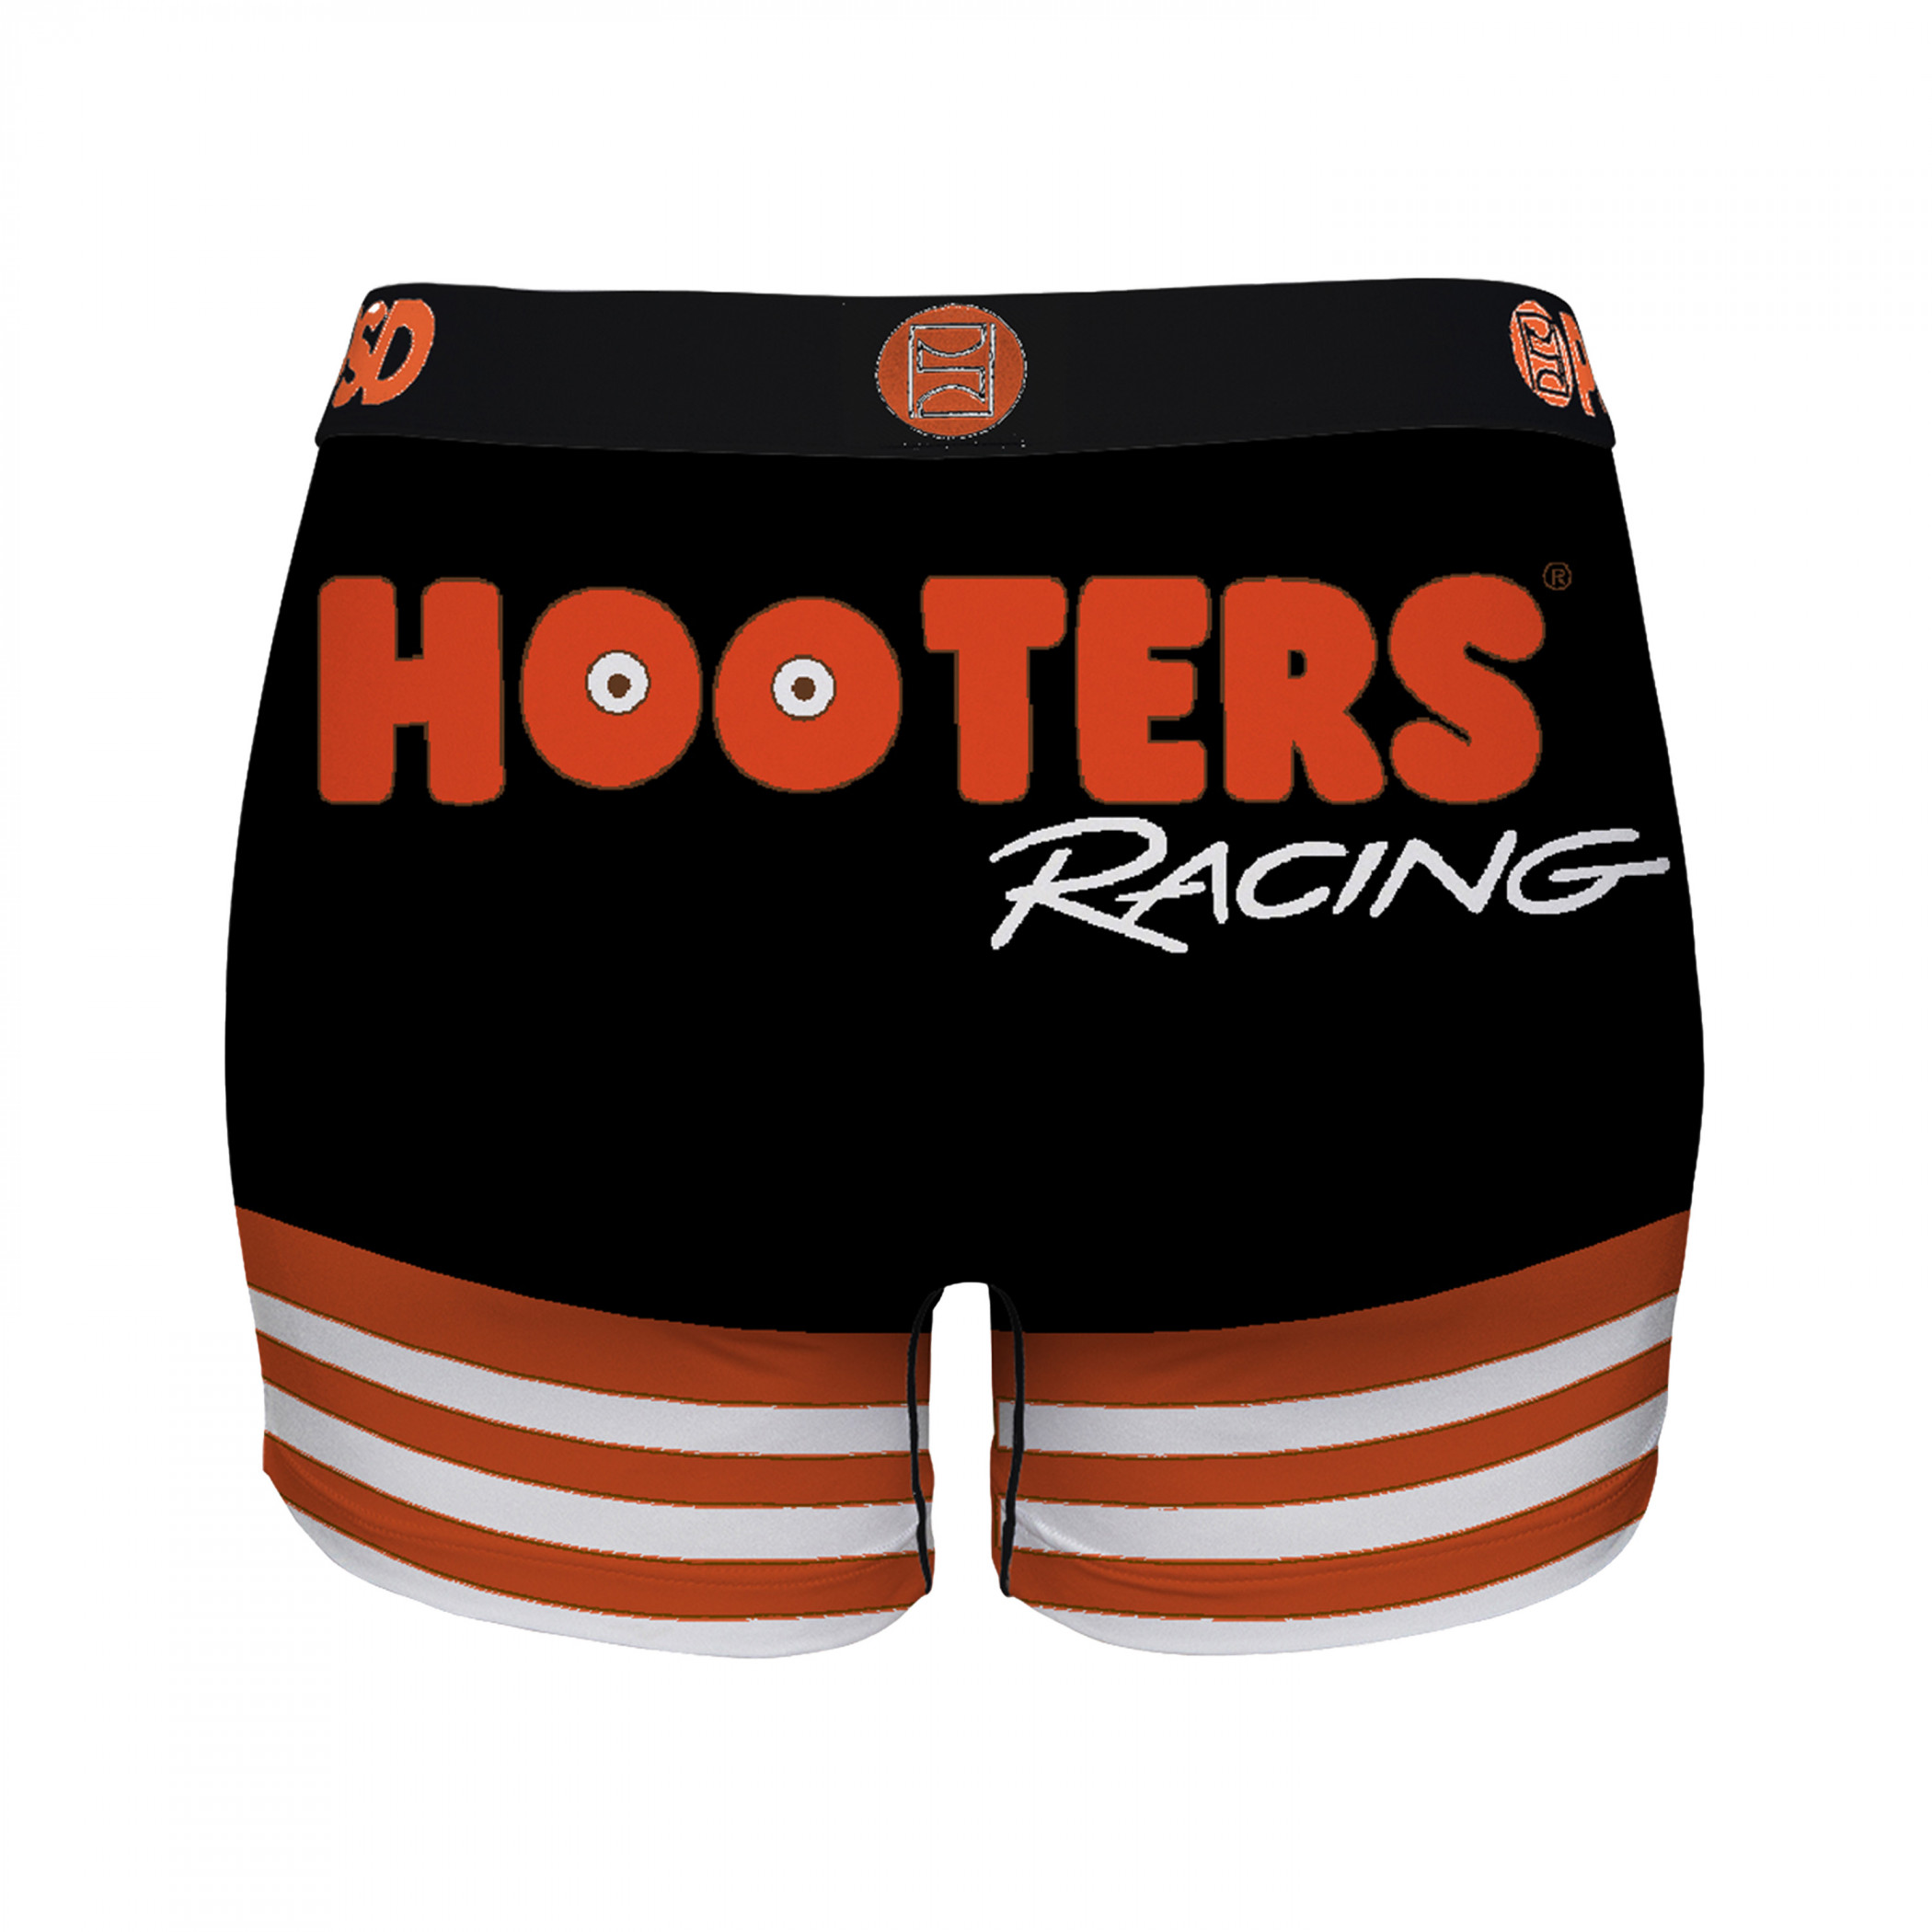 Hooters Restaurant Uniform Black Microfiber Blend PSD Boy Shorts